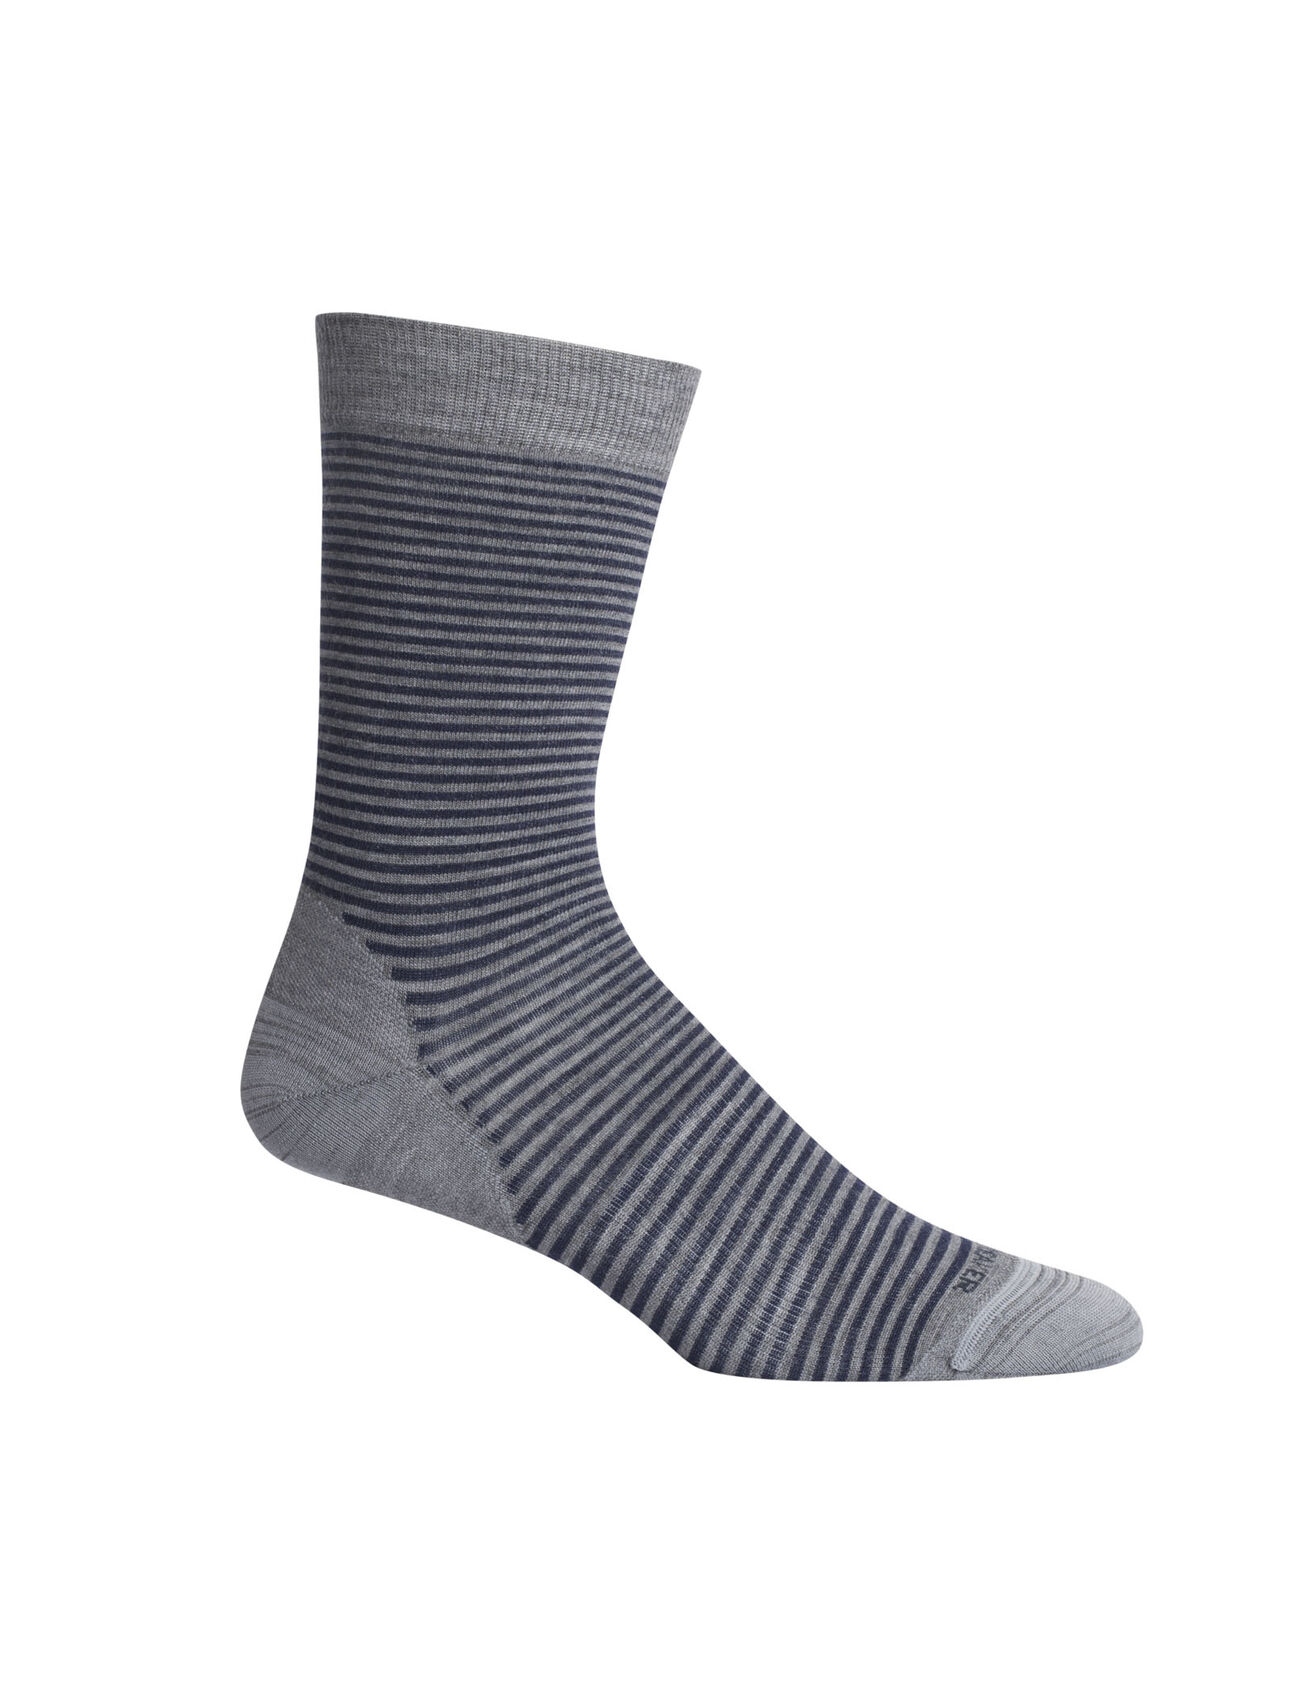 Lifestyle fijngebreide, halfhoge sokken Micro Stripe van merinowol